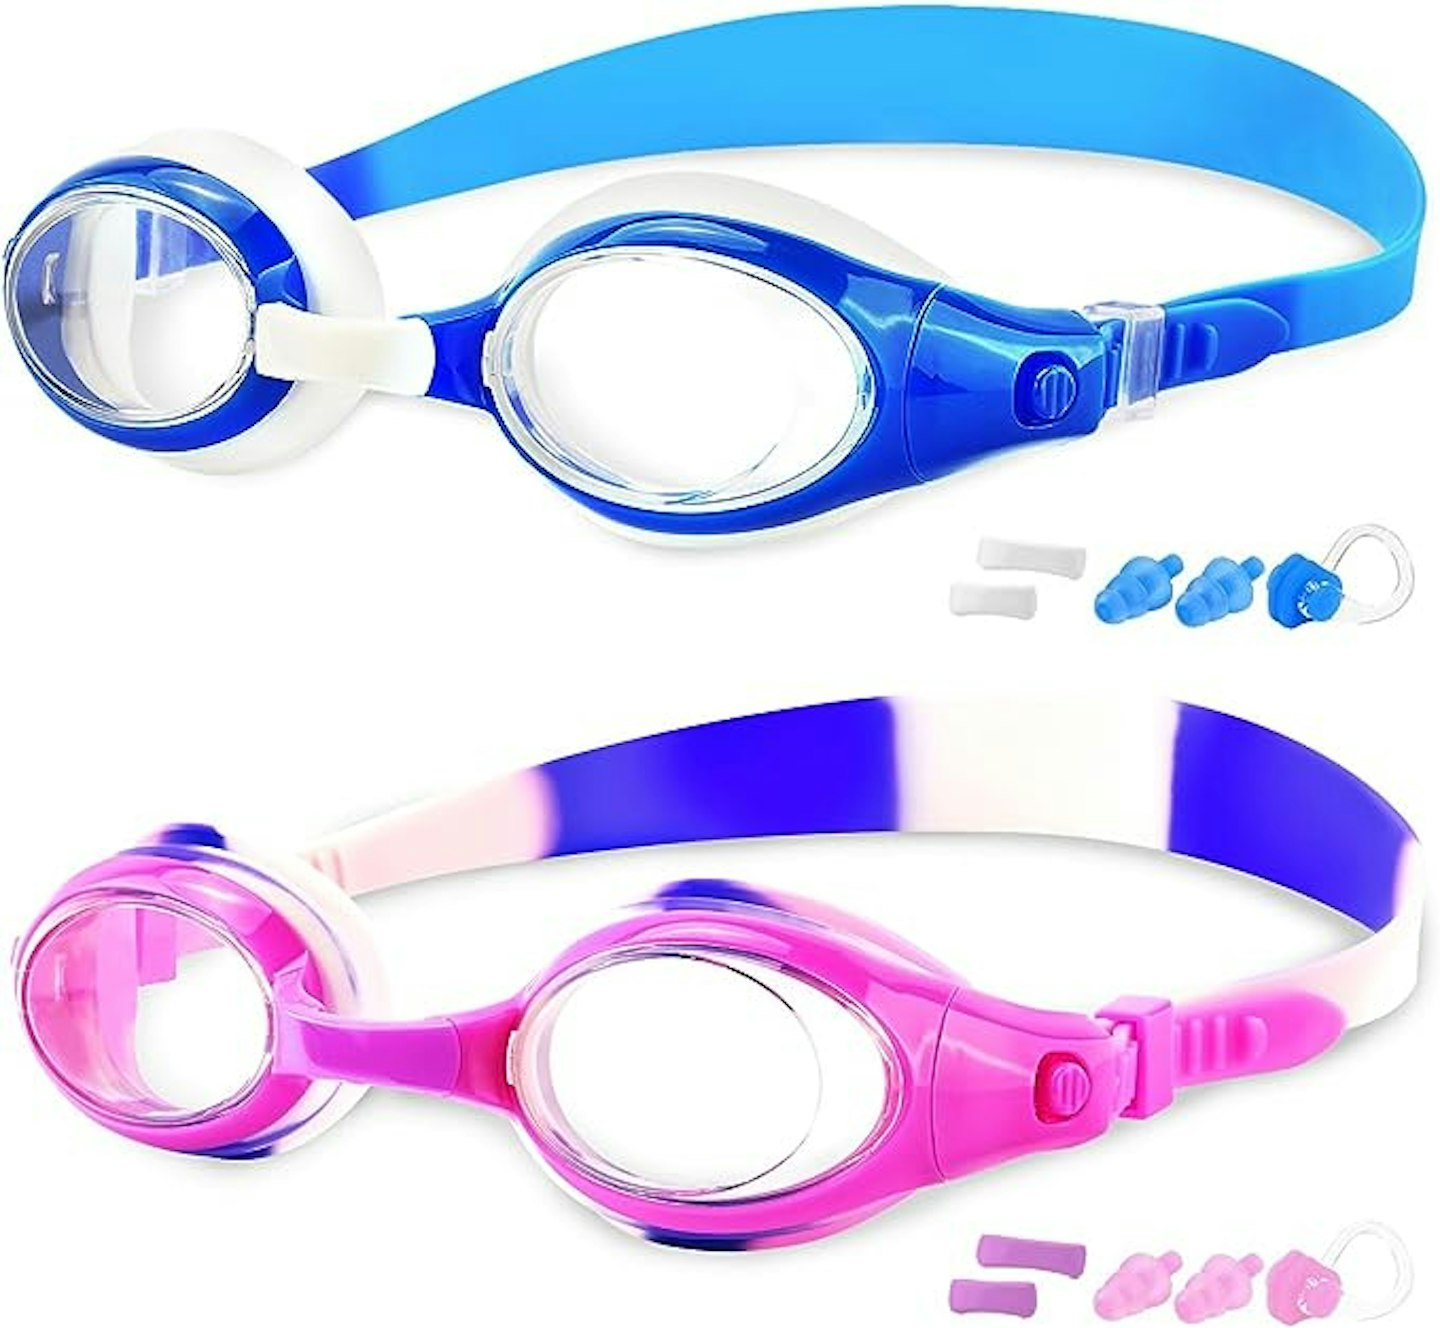 Kids' swimming goggles